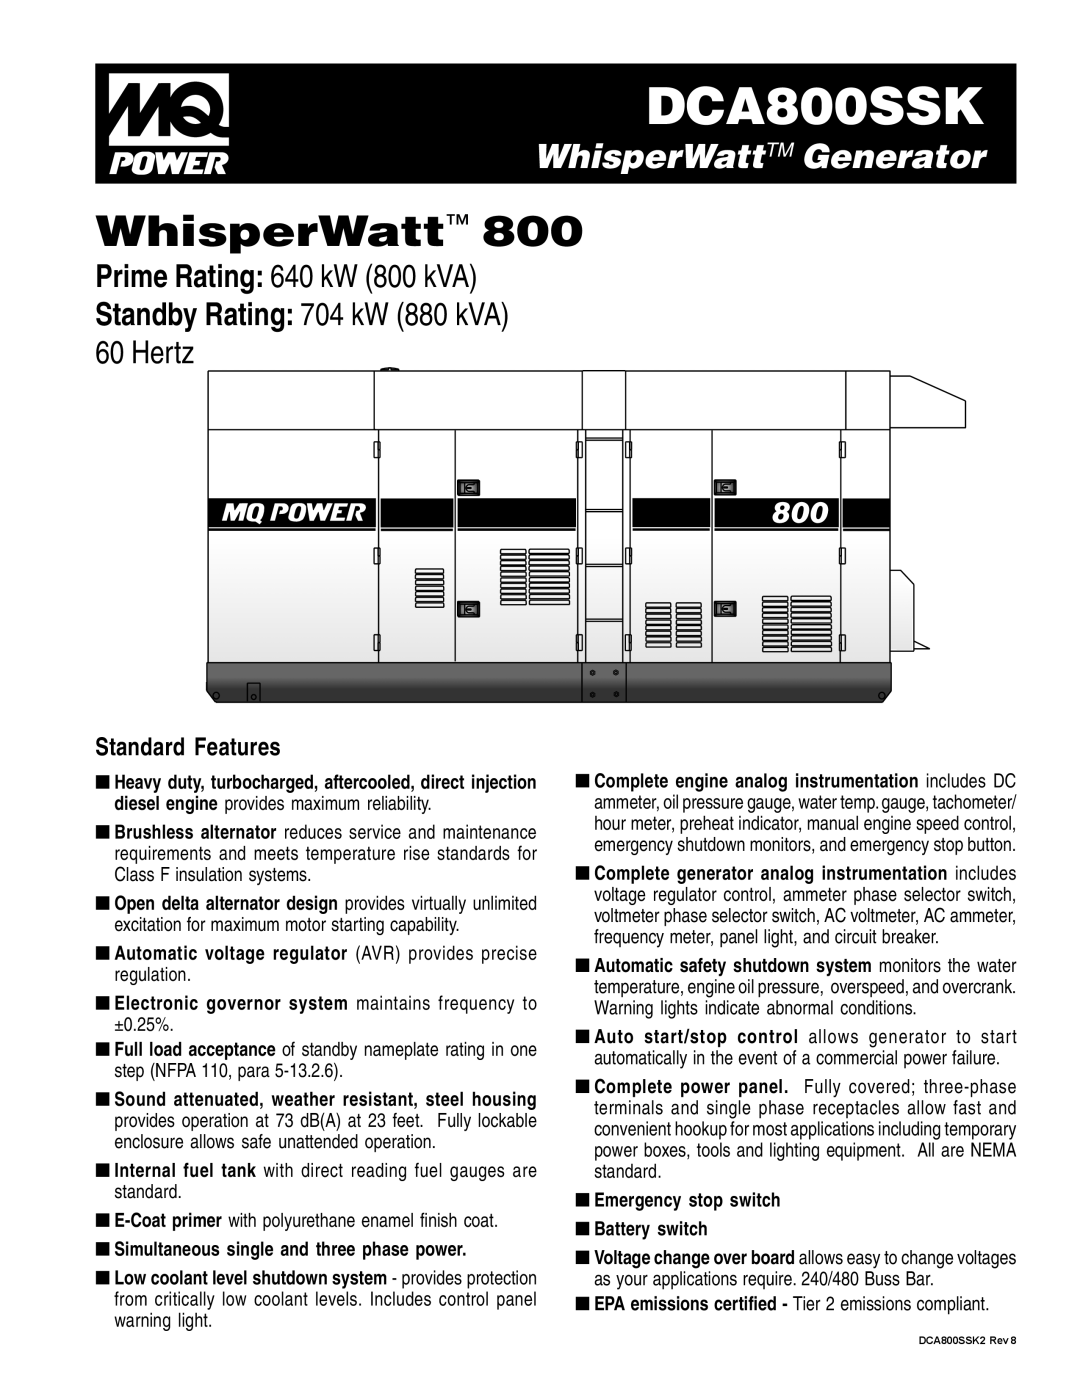 Multiquip DCA800SSK manual WhisperWattTM Generator, Standard Features, Prime Rating 640 kW 800 kVA, Hertz 